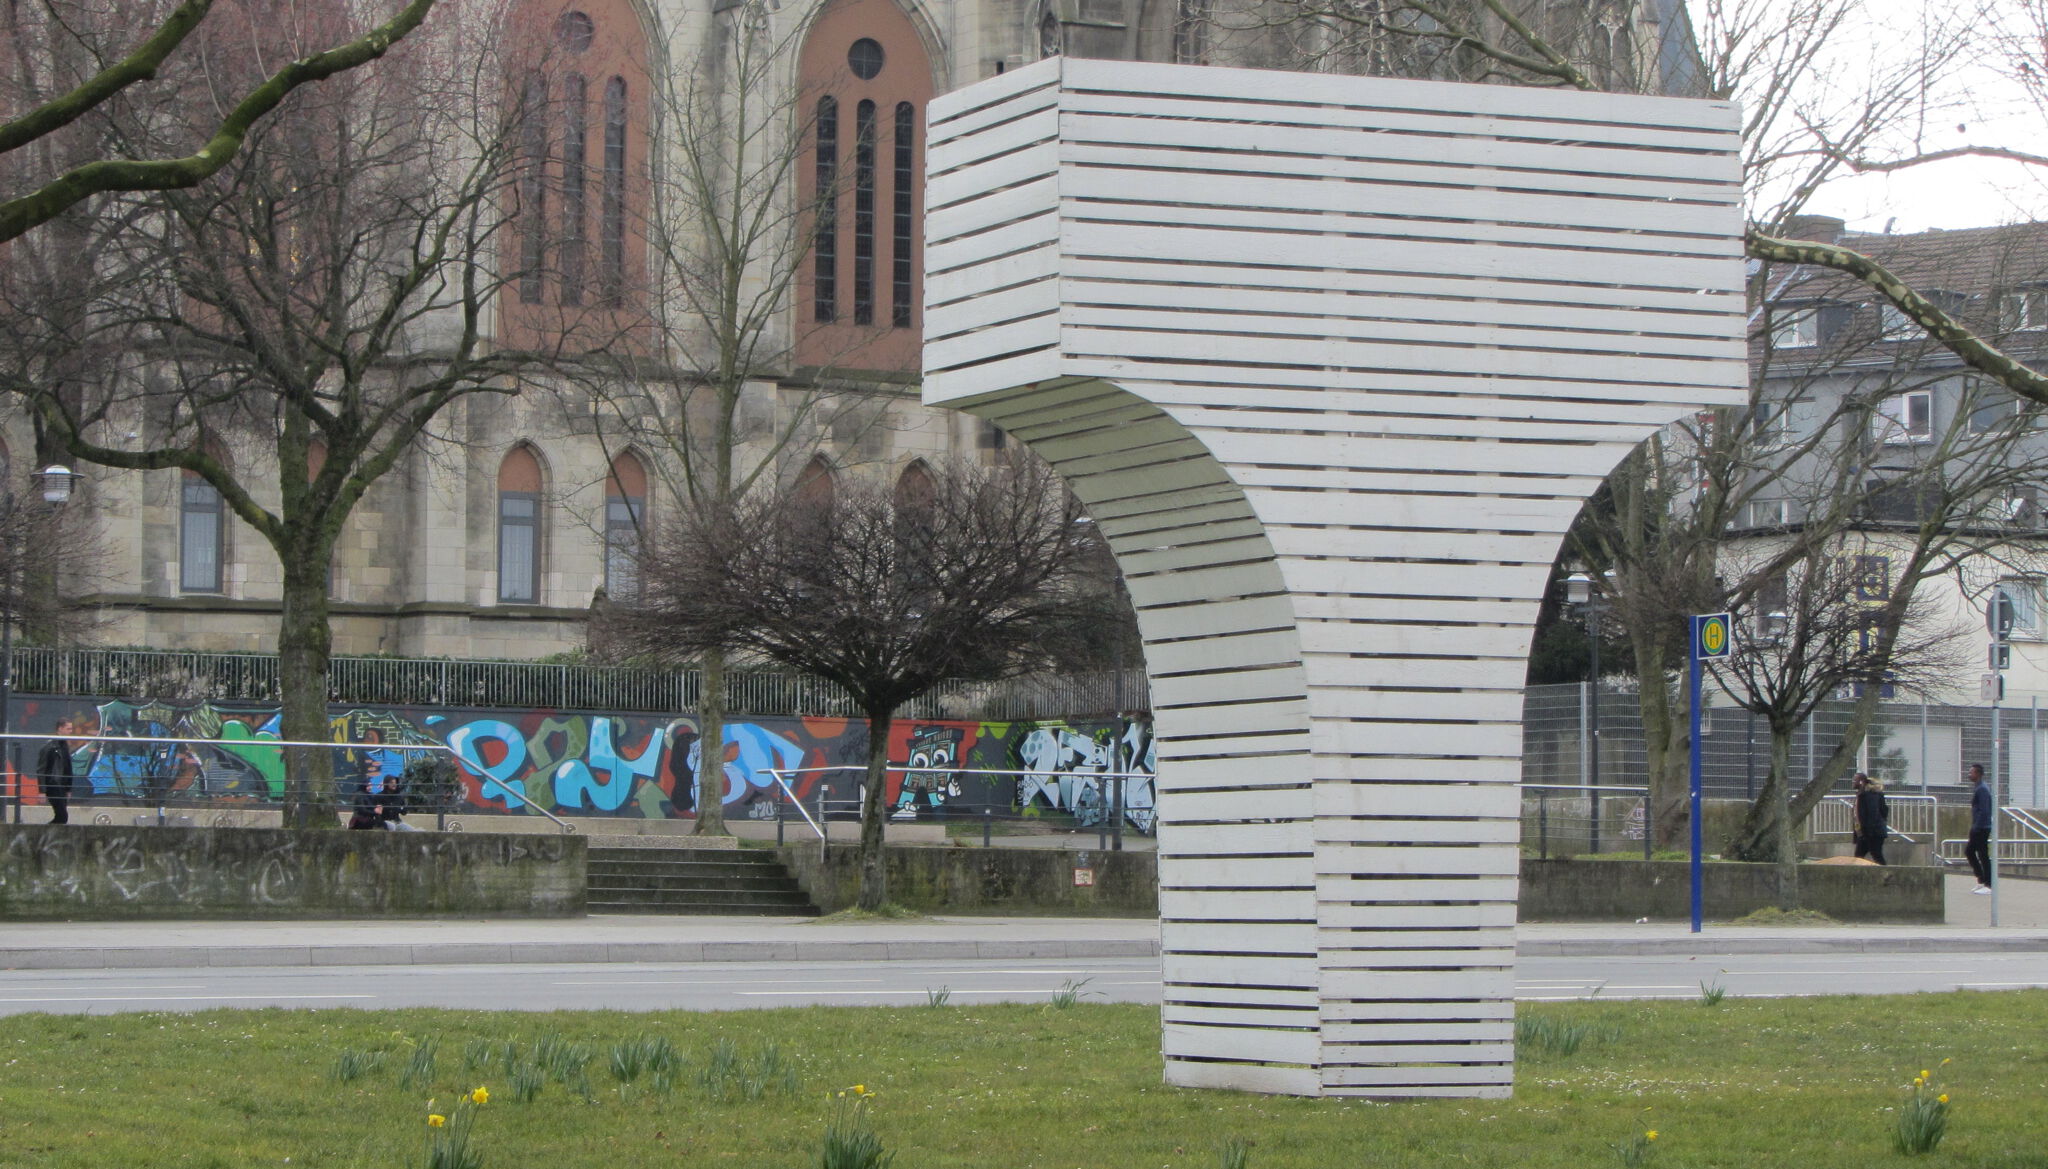 Hubert Sandmann, Miriam Giessler, and others&mdash;Kunststück - Presentation display area for urban art